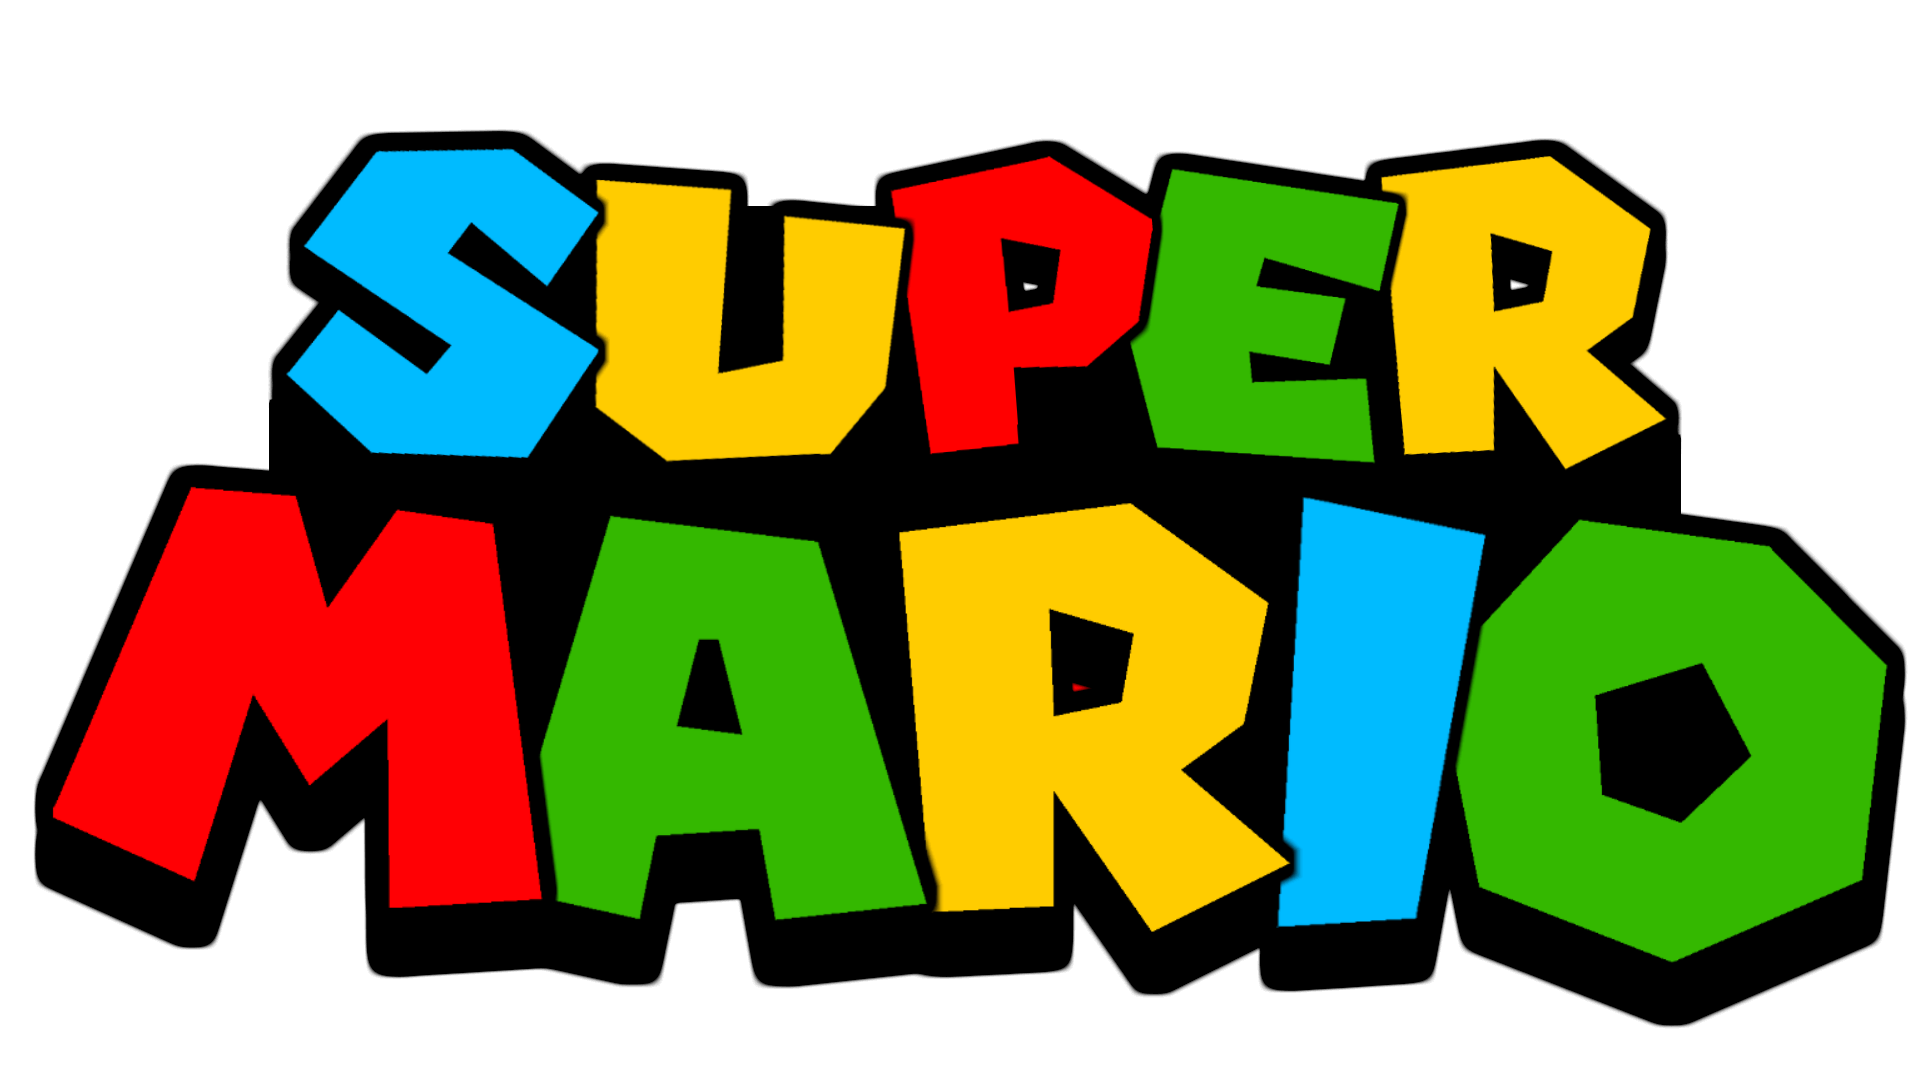 Mario Logo - Just made Mario Logo from scratch